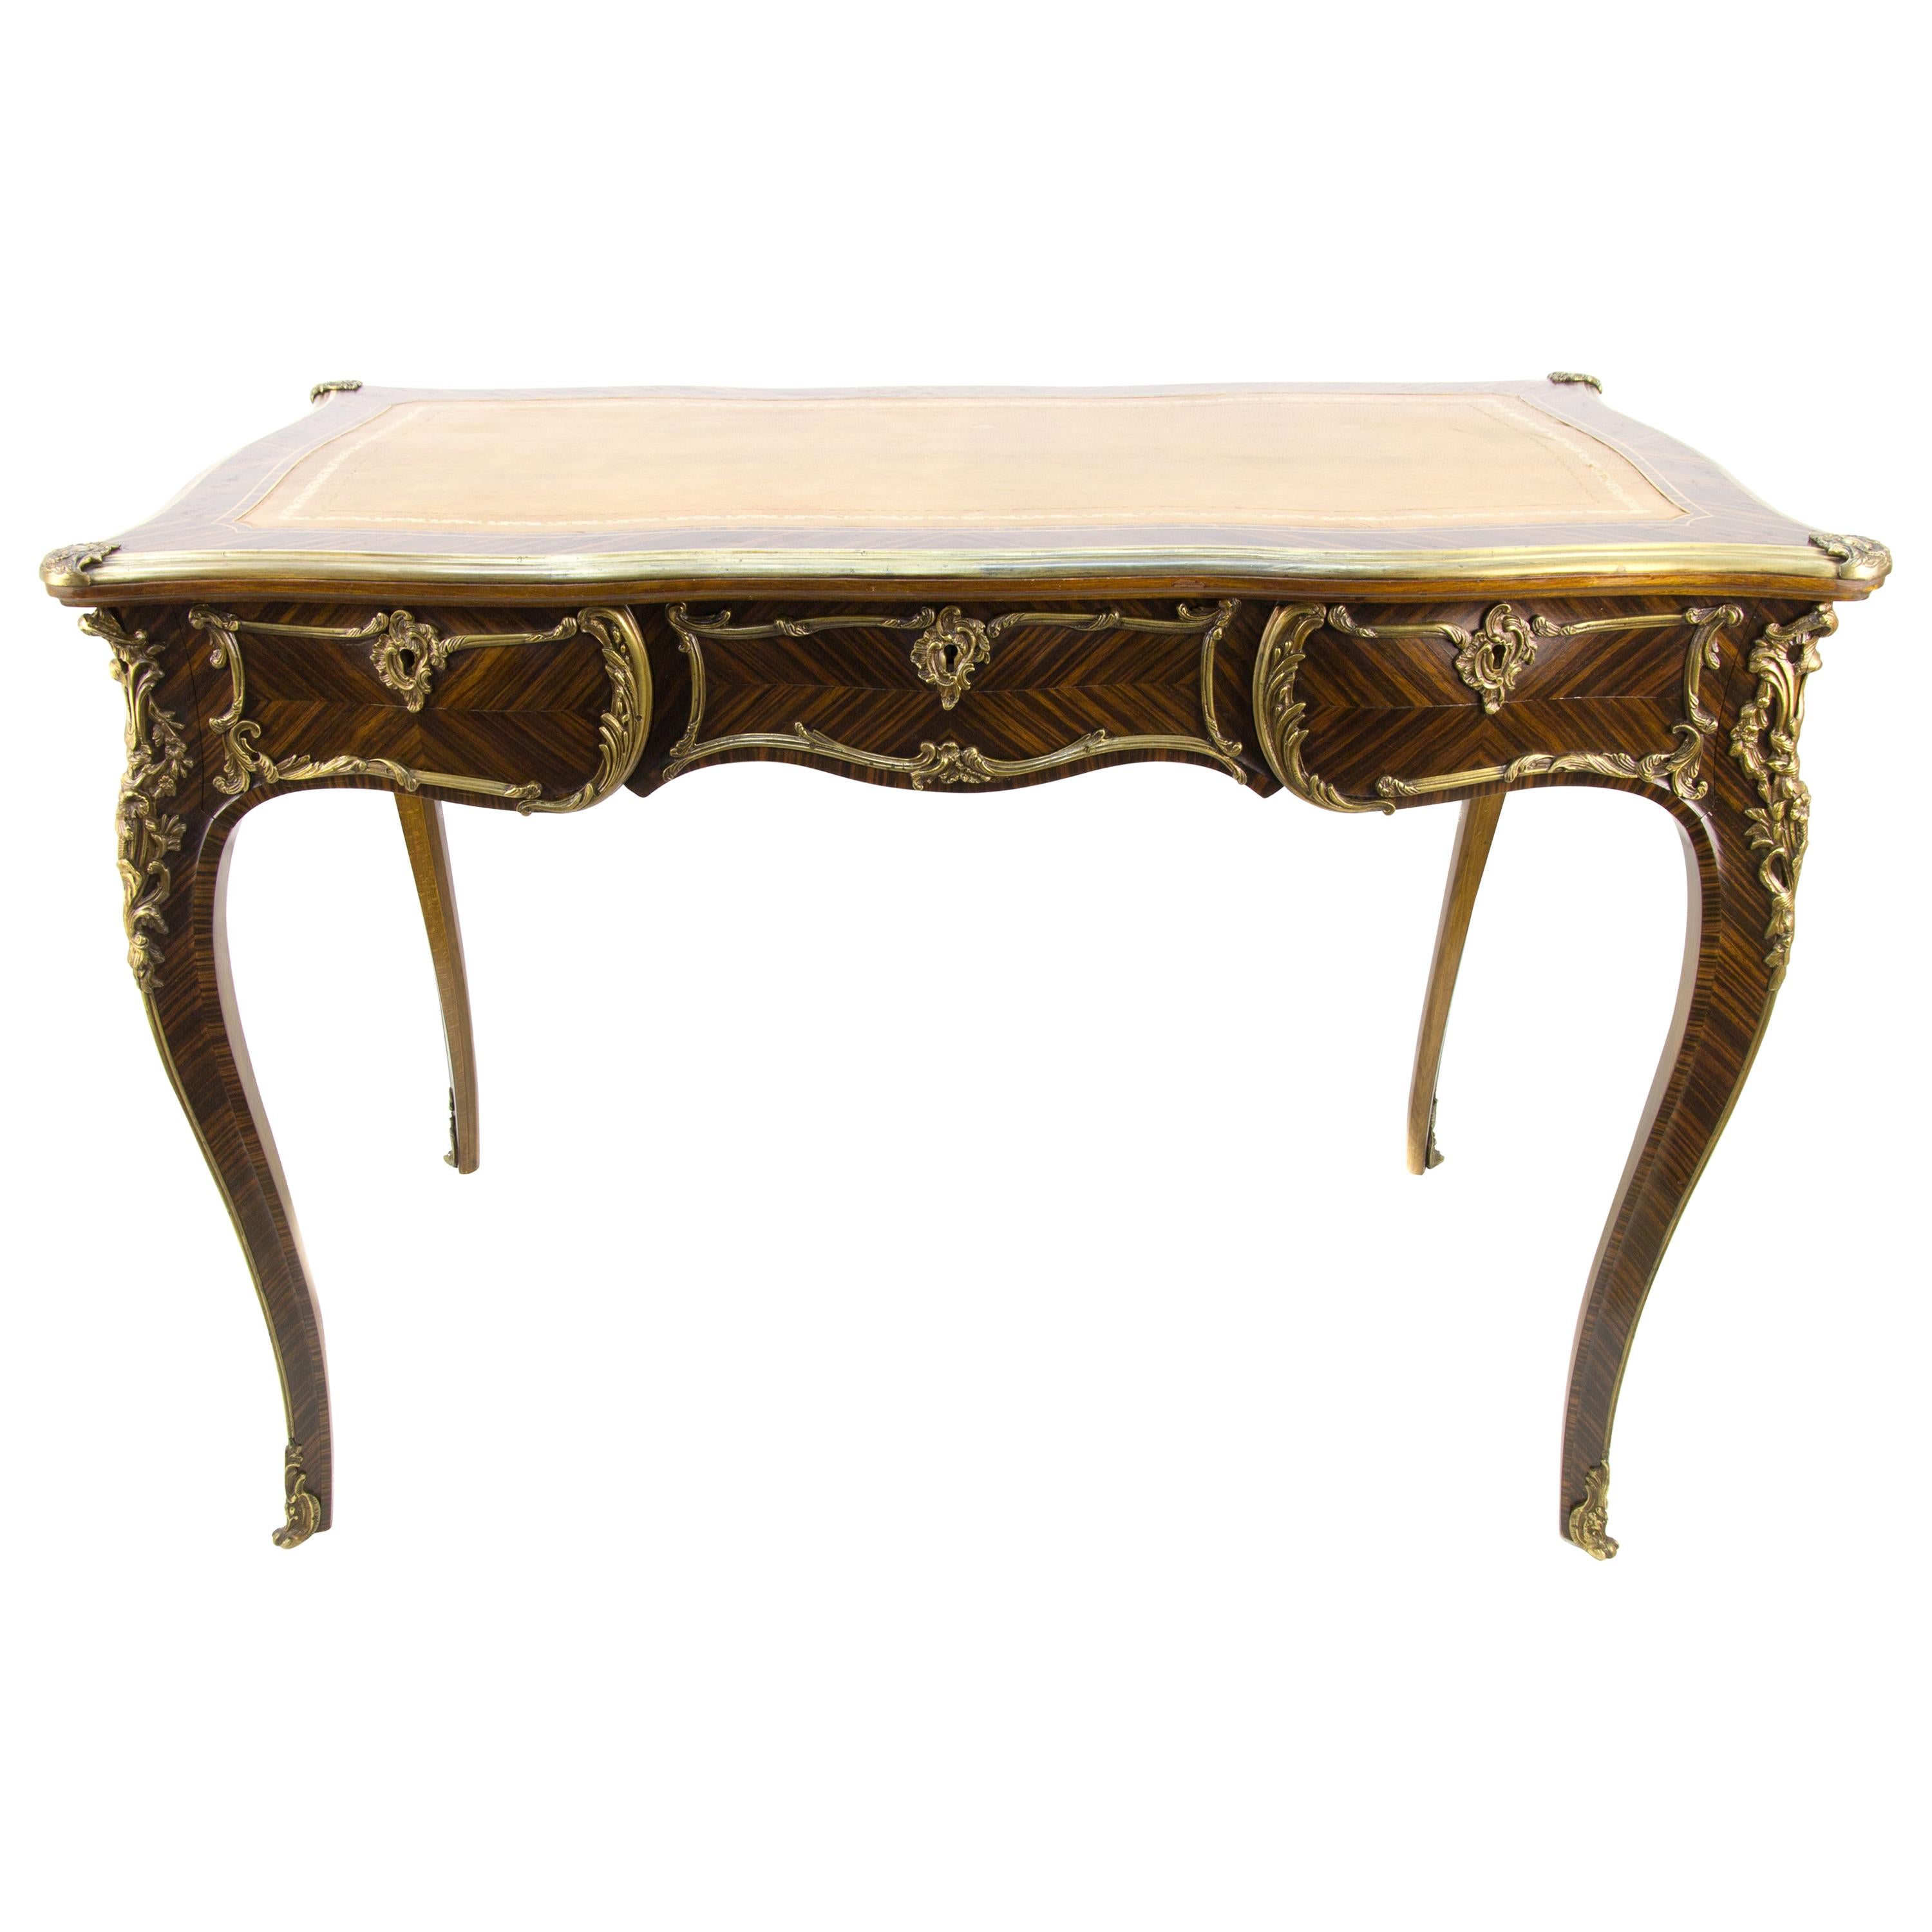 Louis XV Style Bureau Plat or Writing Desk with Bronze Mounts